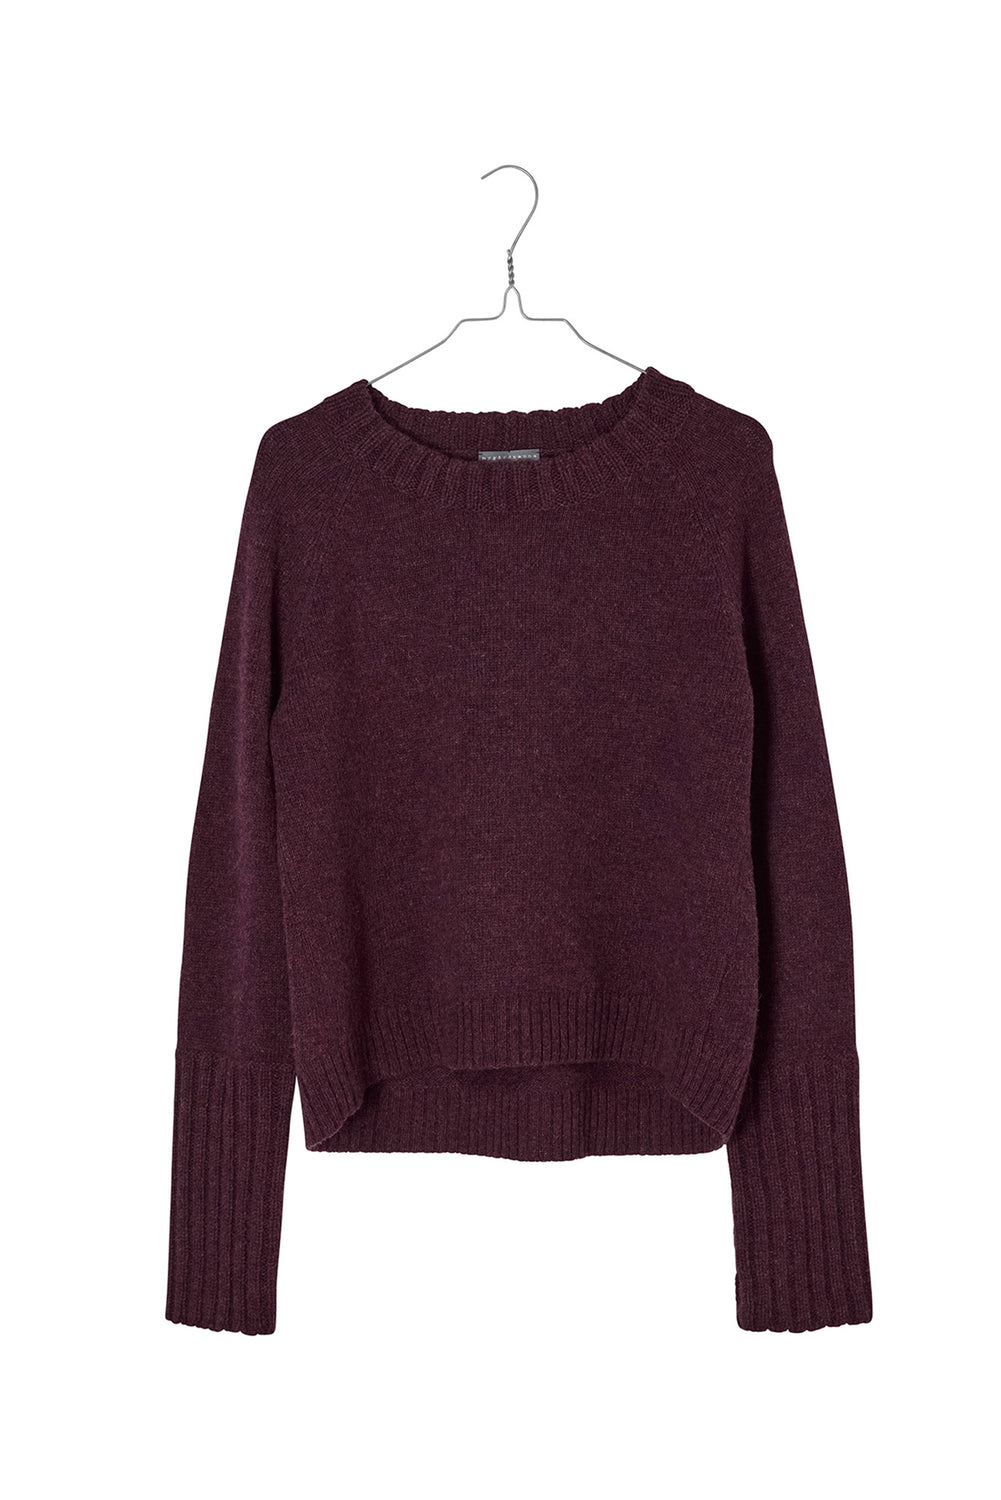 Pullover Sweater, Wine